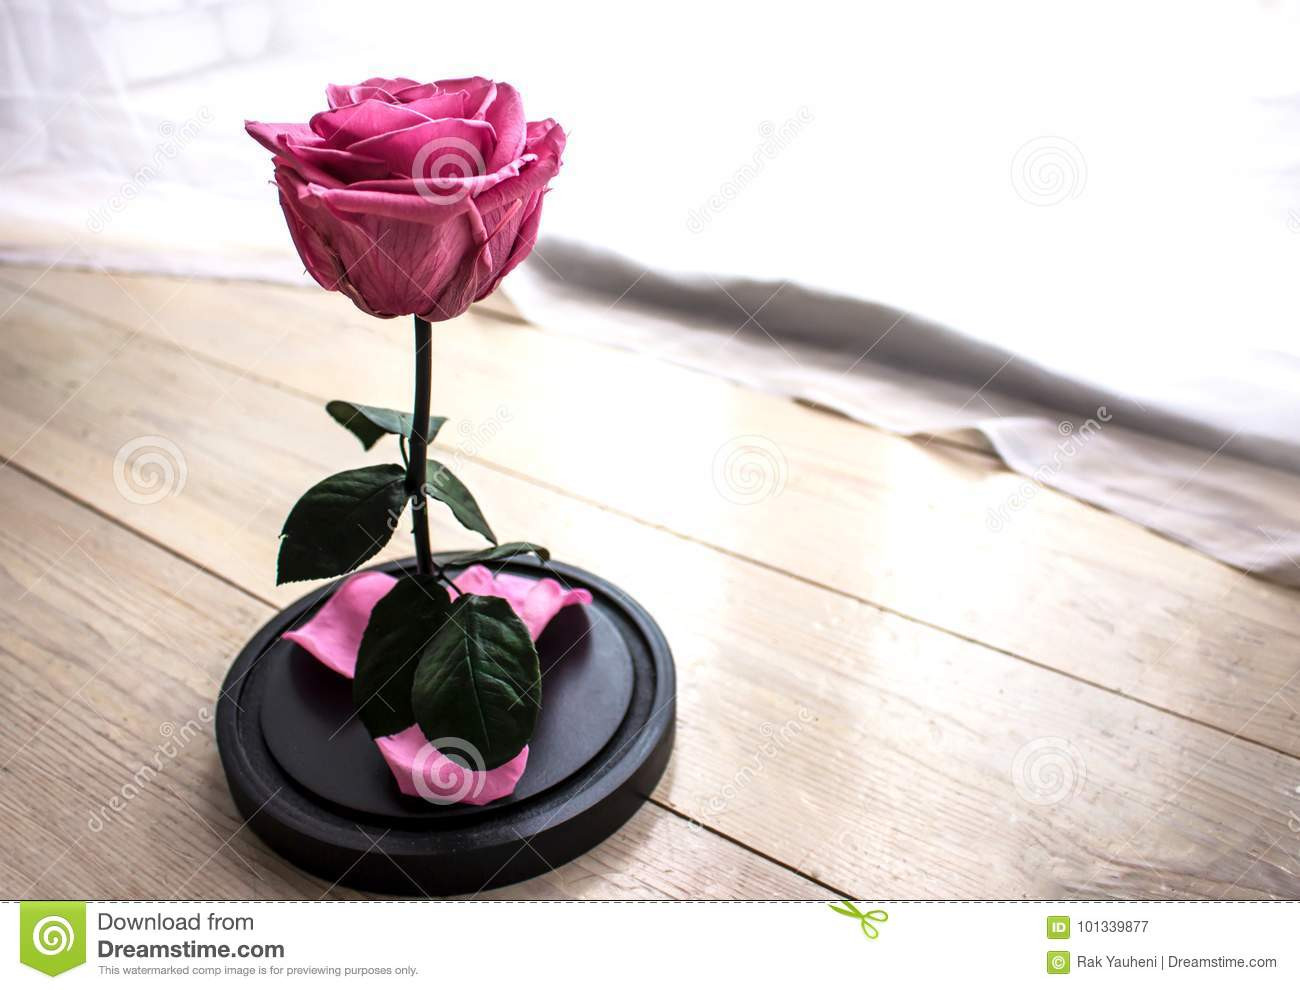 10 Stylish Hot Pink Flower Vases 2024 free download hot pink flower vases of eternal pink rose in a flask stock image image of happy bottle inside eternal pink rose in a flask